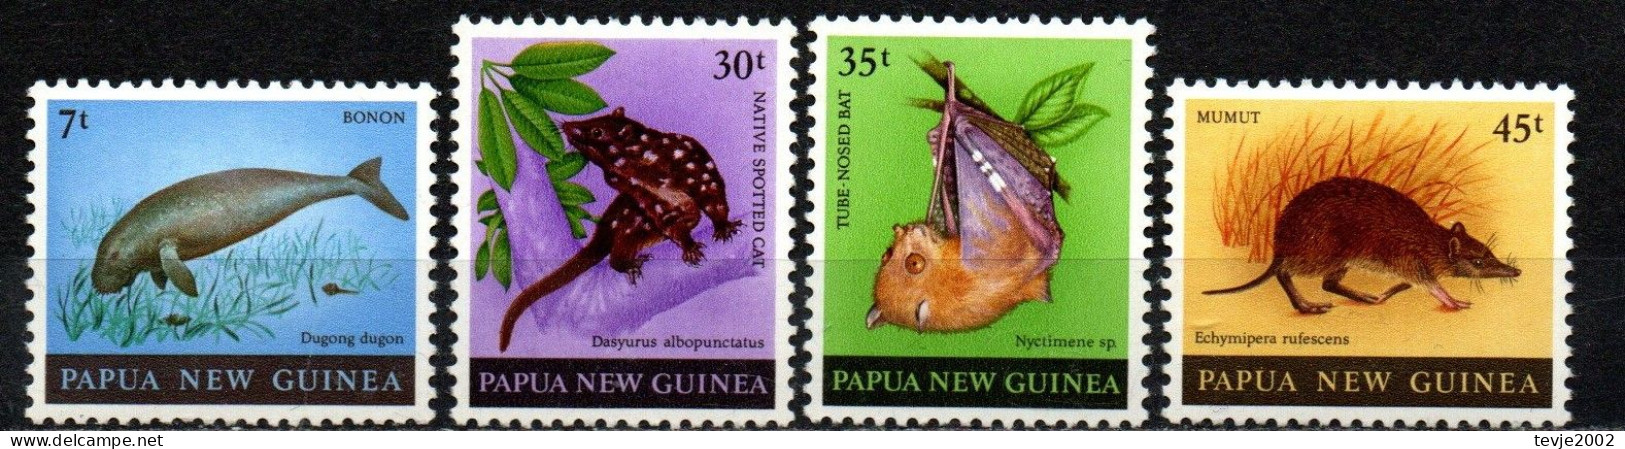 Papau Neuguinea 1980 - Mi.Nr. 398 - 401 - Postfrisch MNH - Tiere Animals - Papua New Guinea